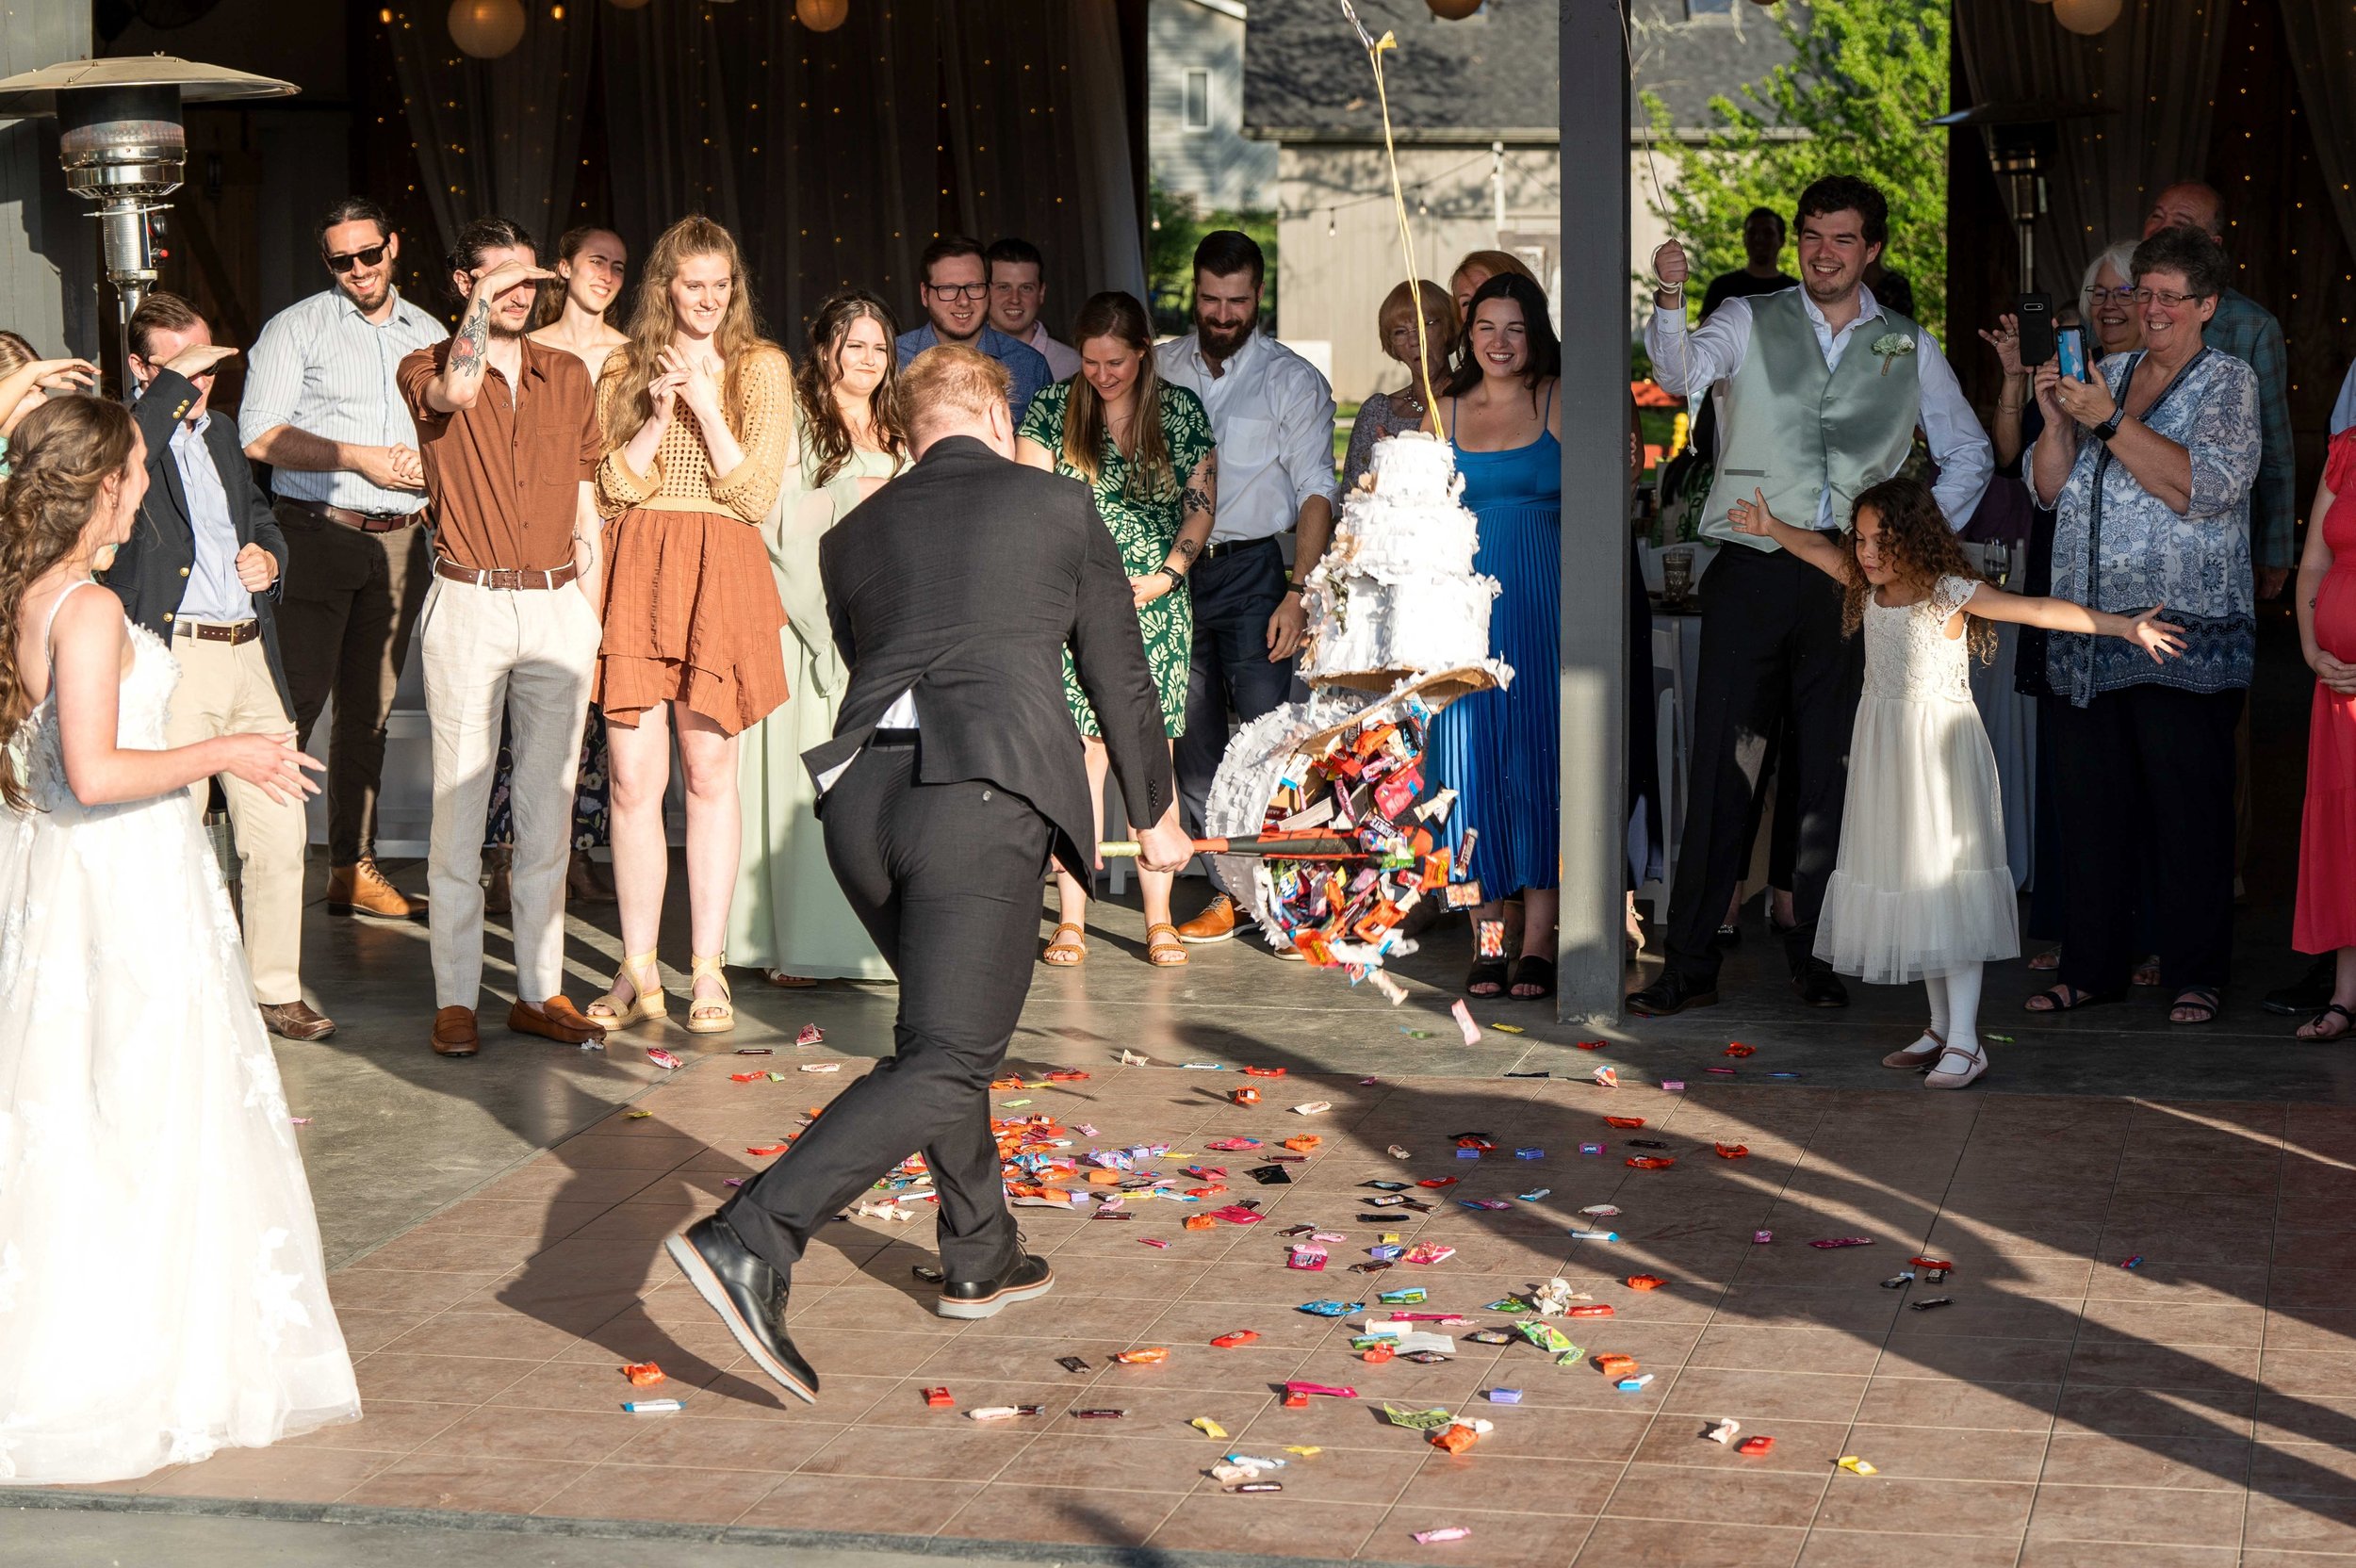 Outdoor April Wedding in Asheville North Carolina at Emerald Ridge Farm & Event Center blog 3 5.jpg